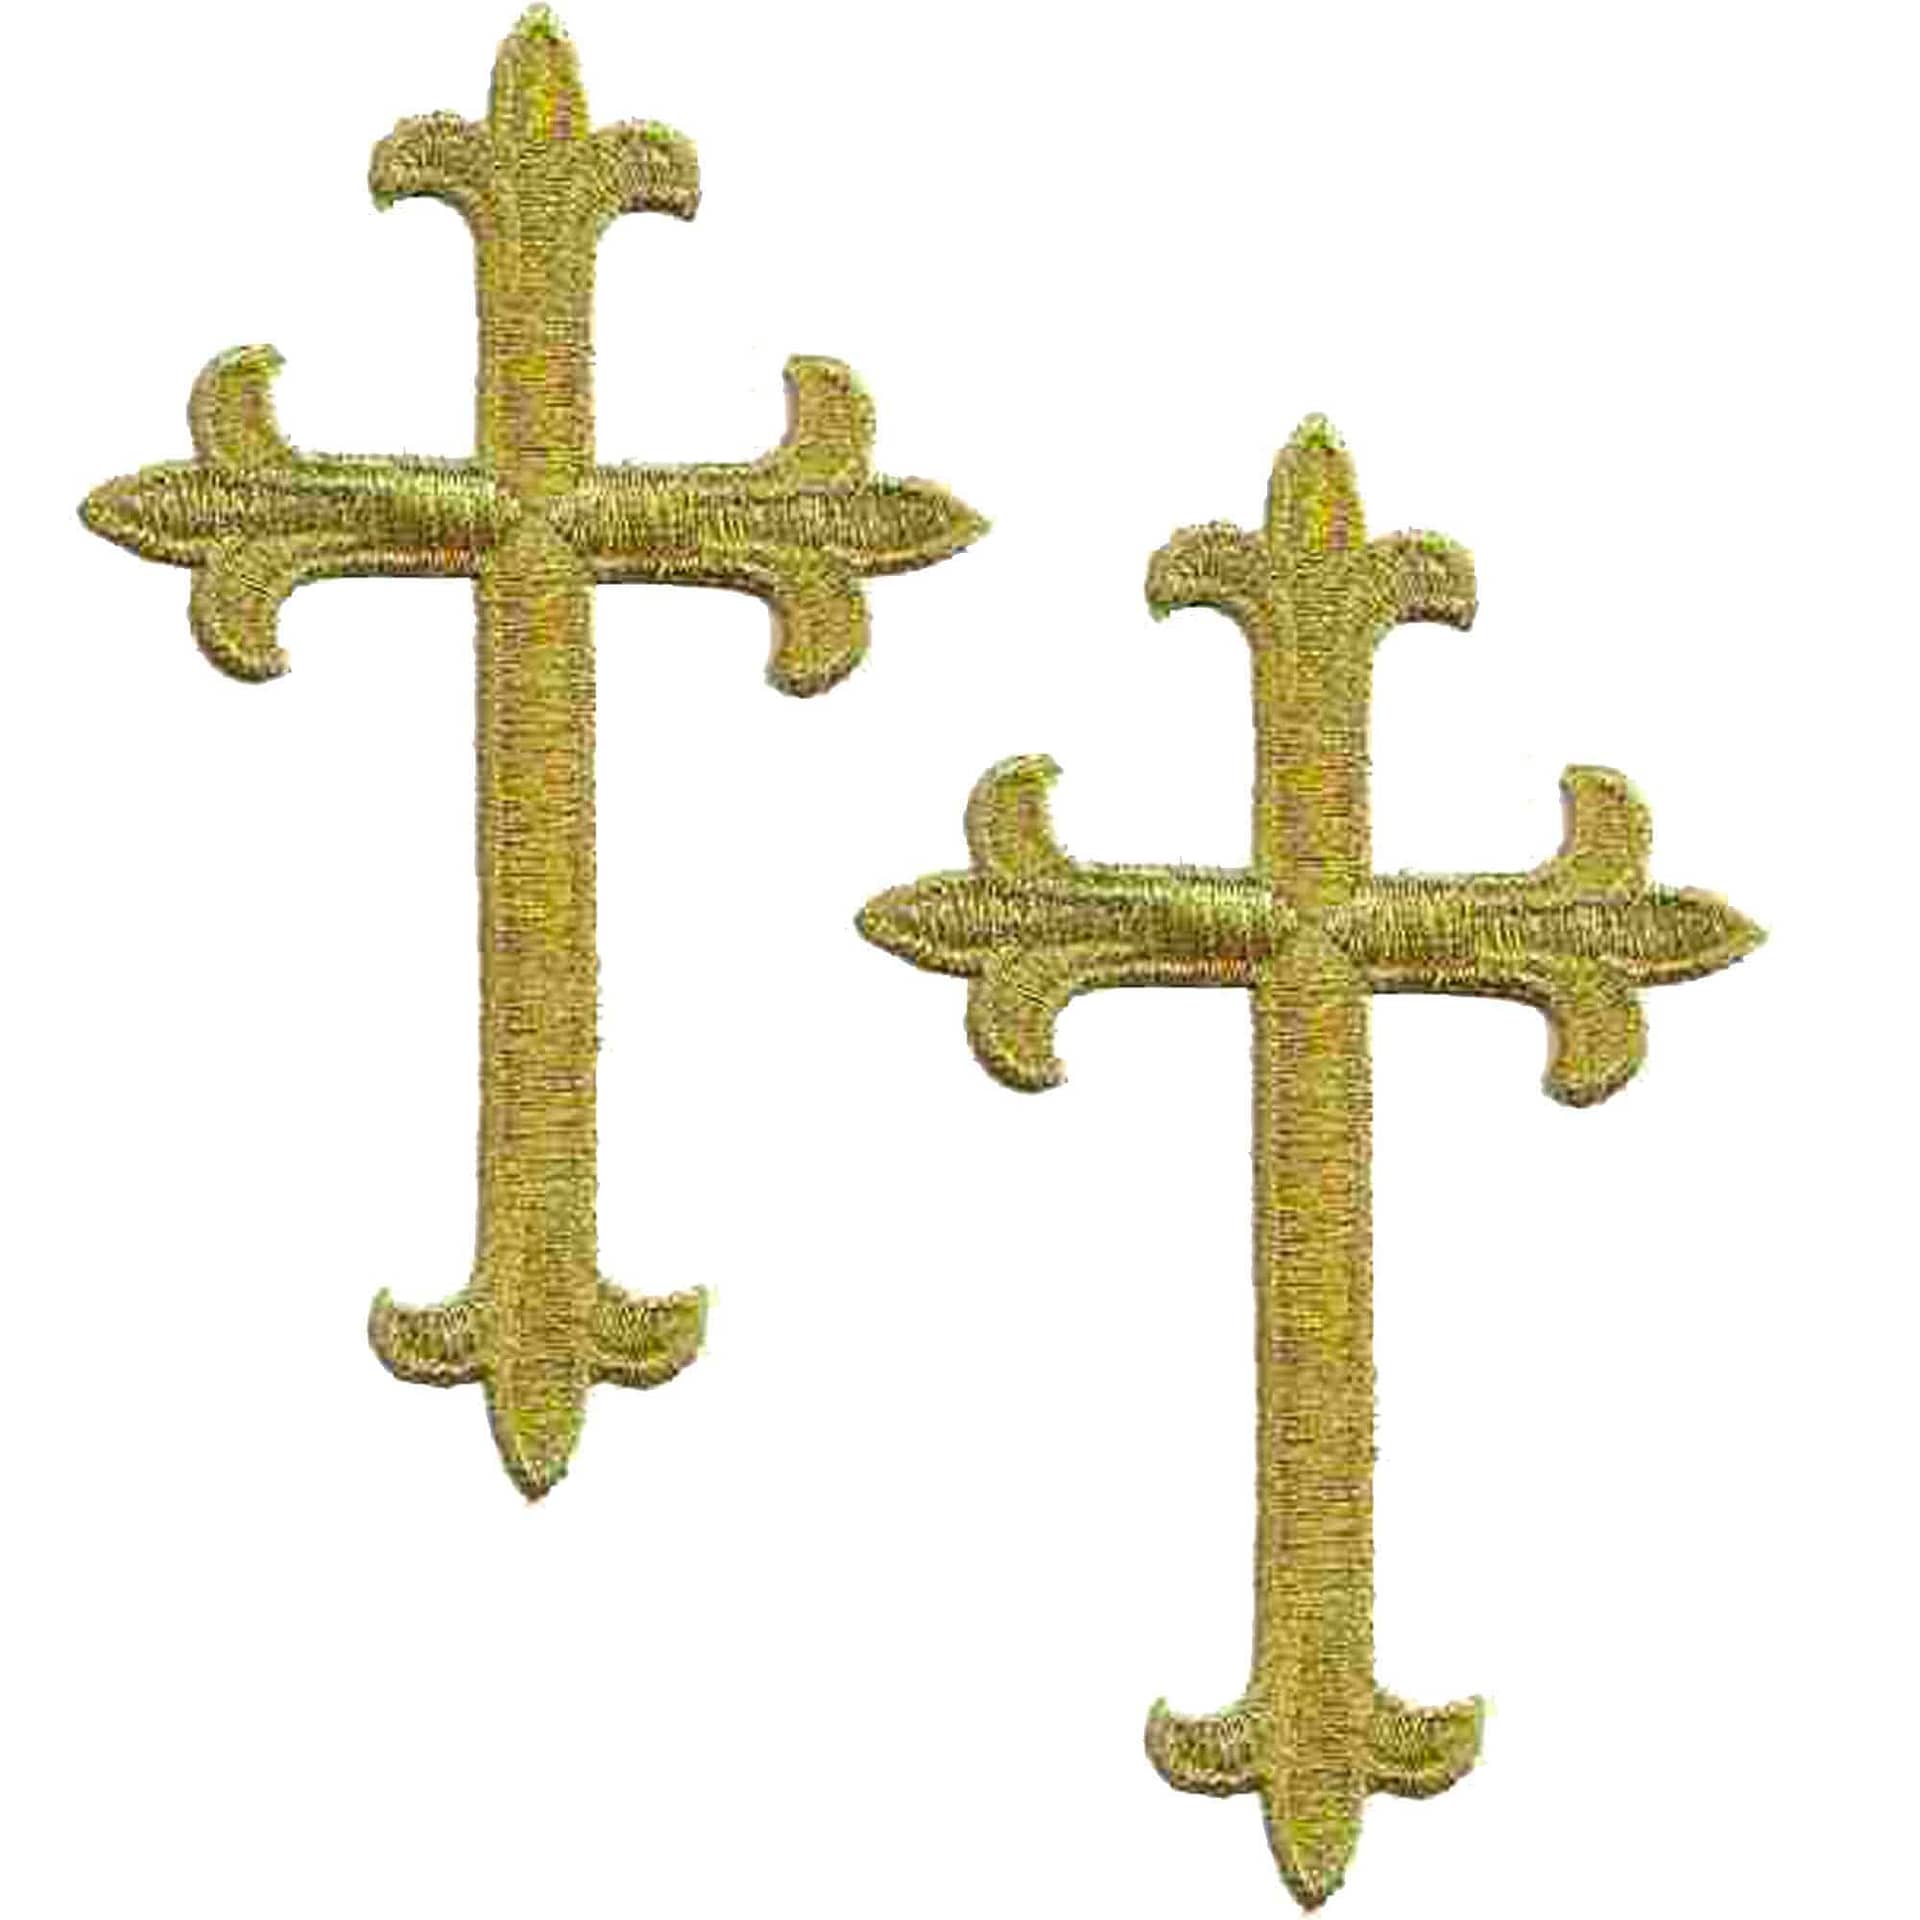 Iron-on golden trilobed cross patch 8 cm